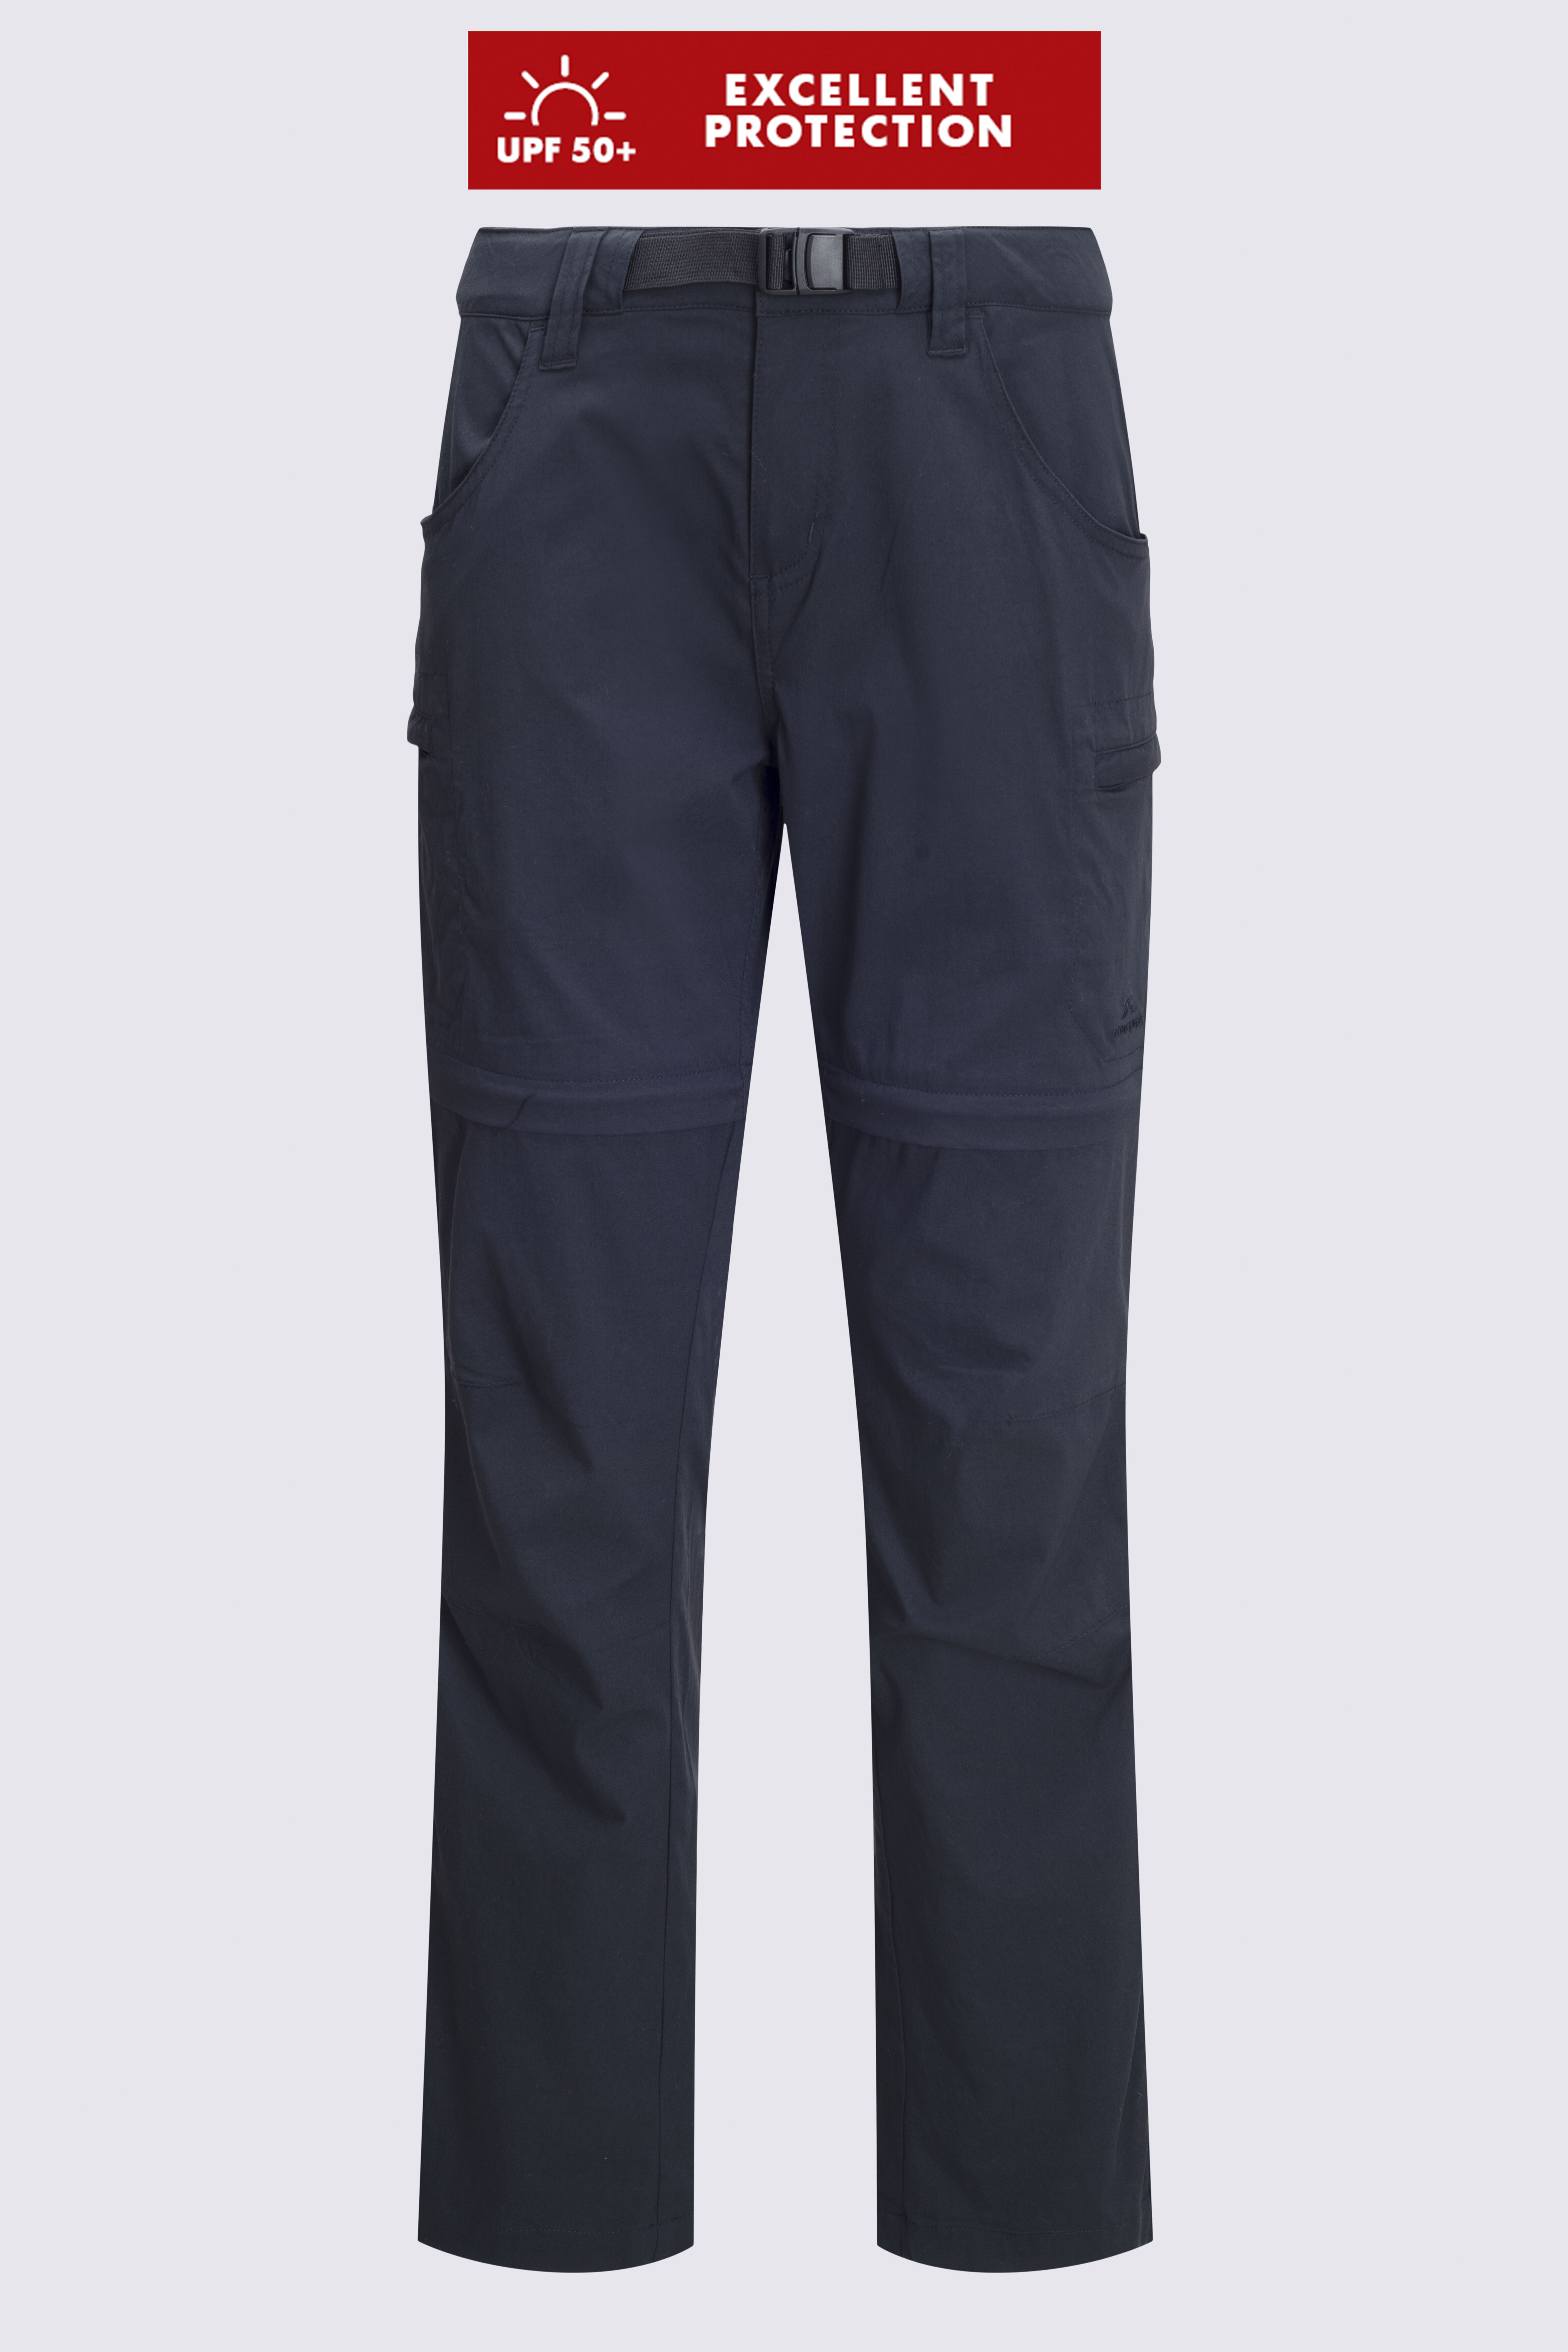 FreeSoldier Men's Tactical Hiking Pants | Lightweight, Quick Dry,  Convertible Belt, Outdoor Gear